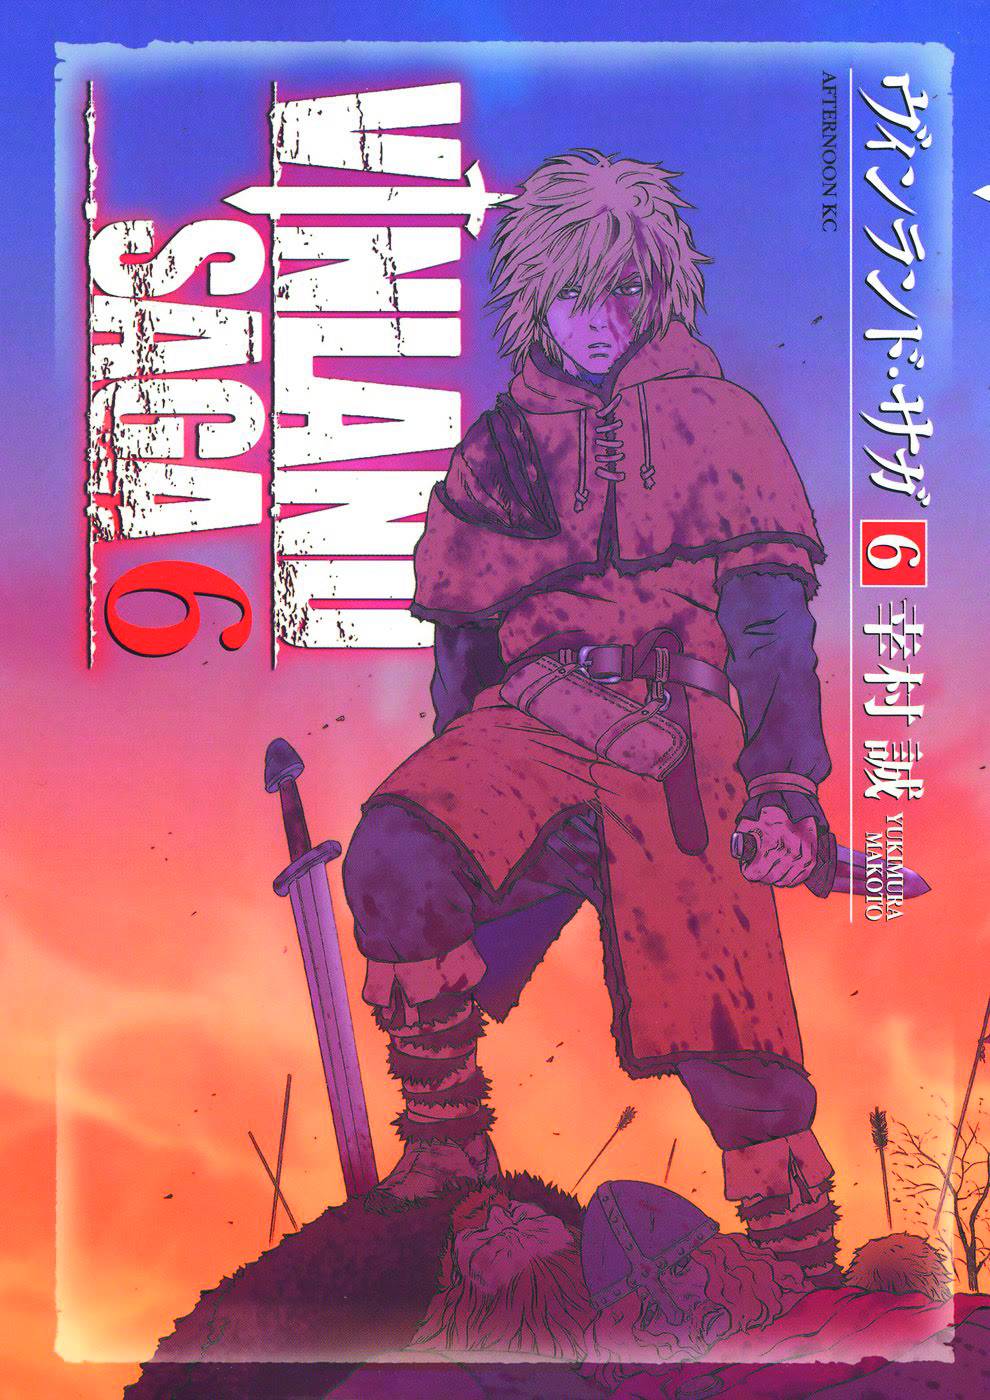 Vinland Saga 2 - 01 - 59 - Lost in Anime